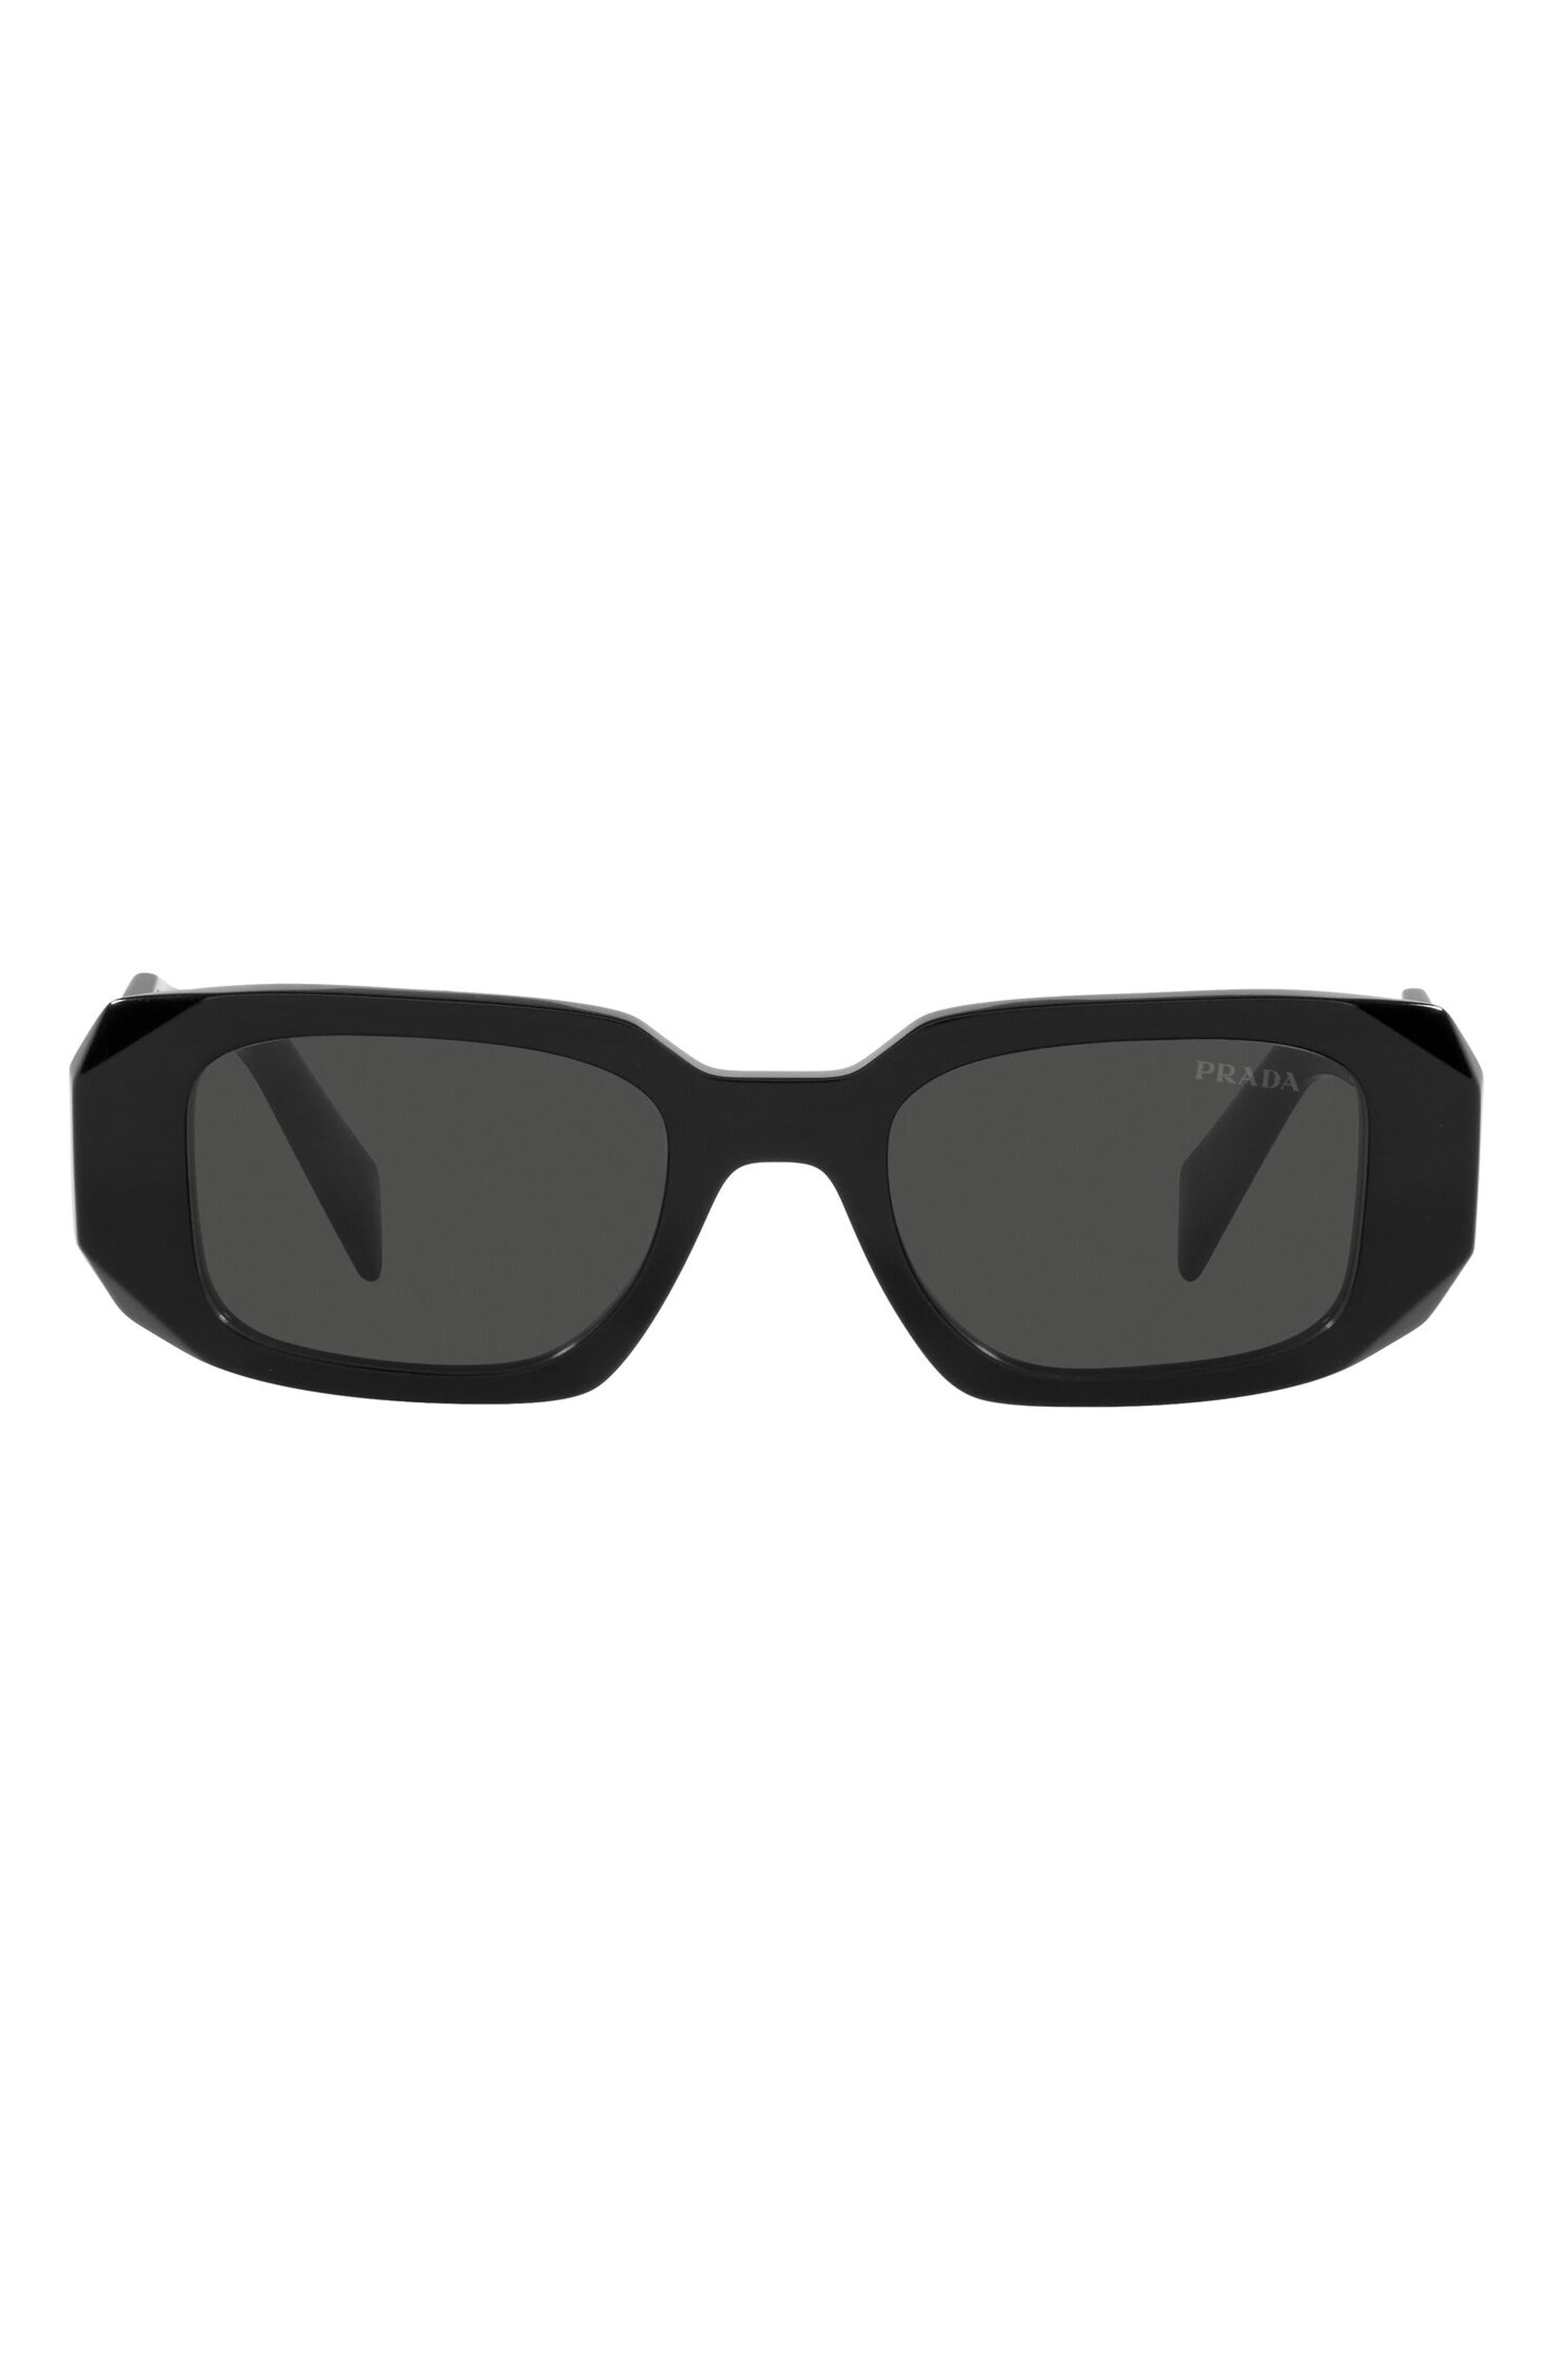 Prada Sunglasses in Black | Lyst